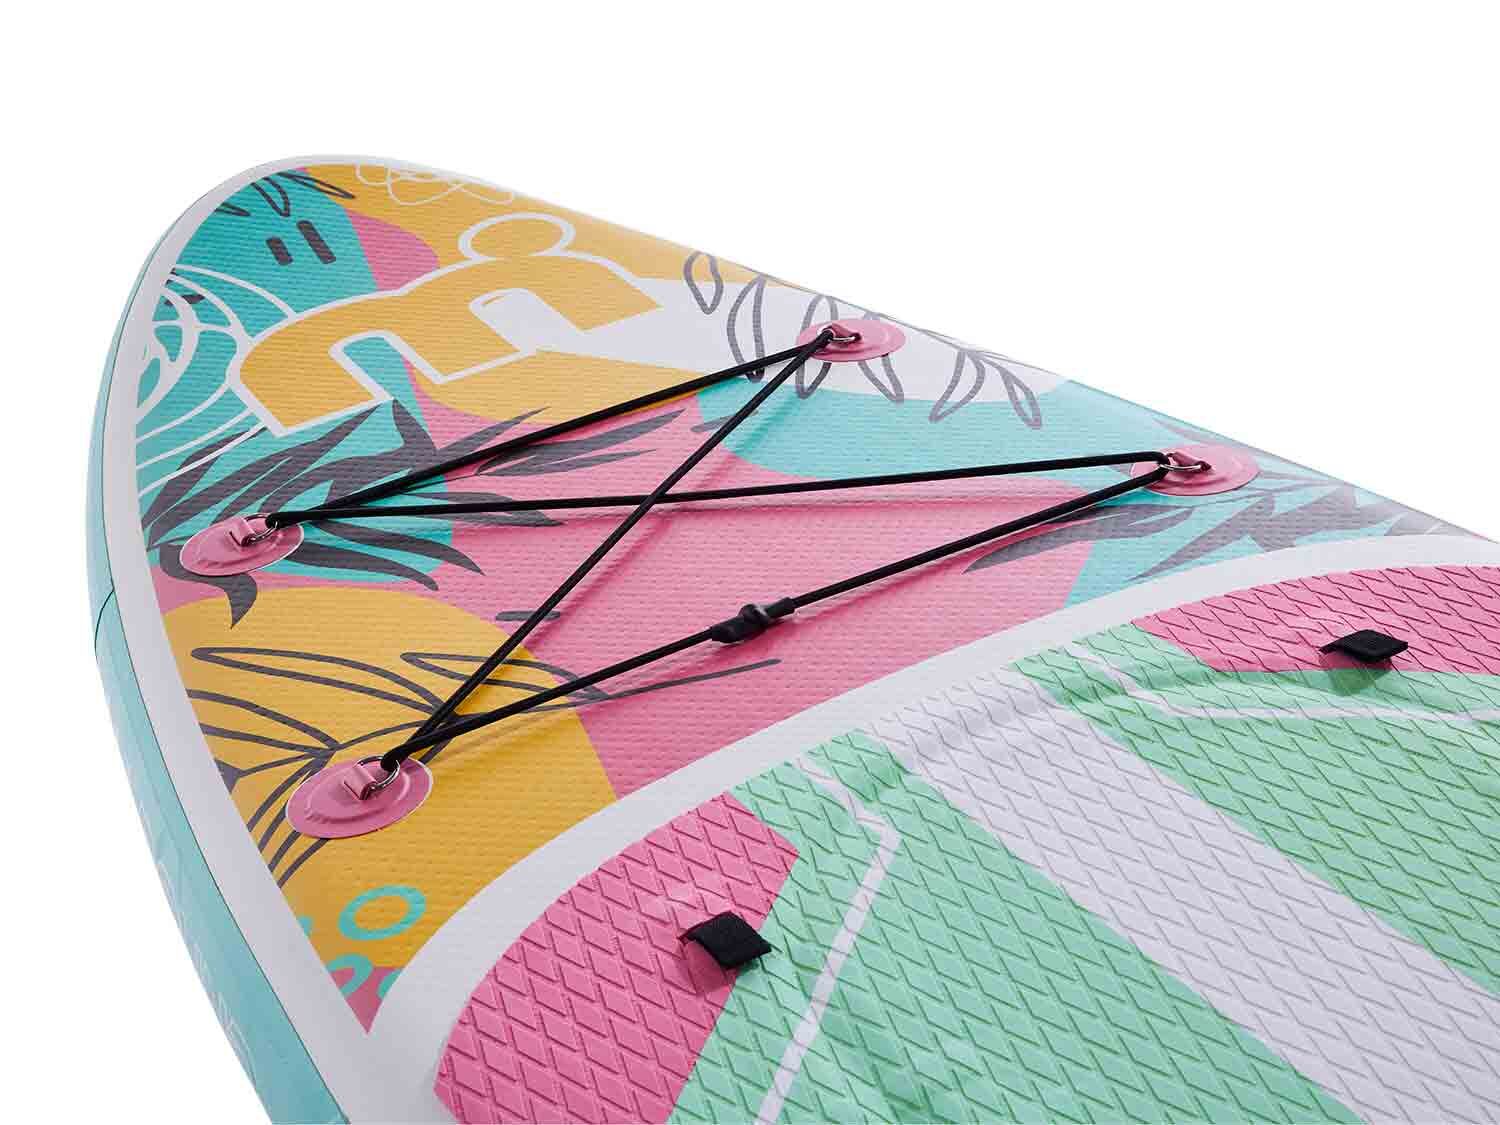 MISTRAL®  Tabla hinchable de paddle surf Floral de doble cámara para 1 persona 320 x 84 x 15 cm